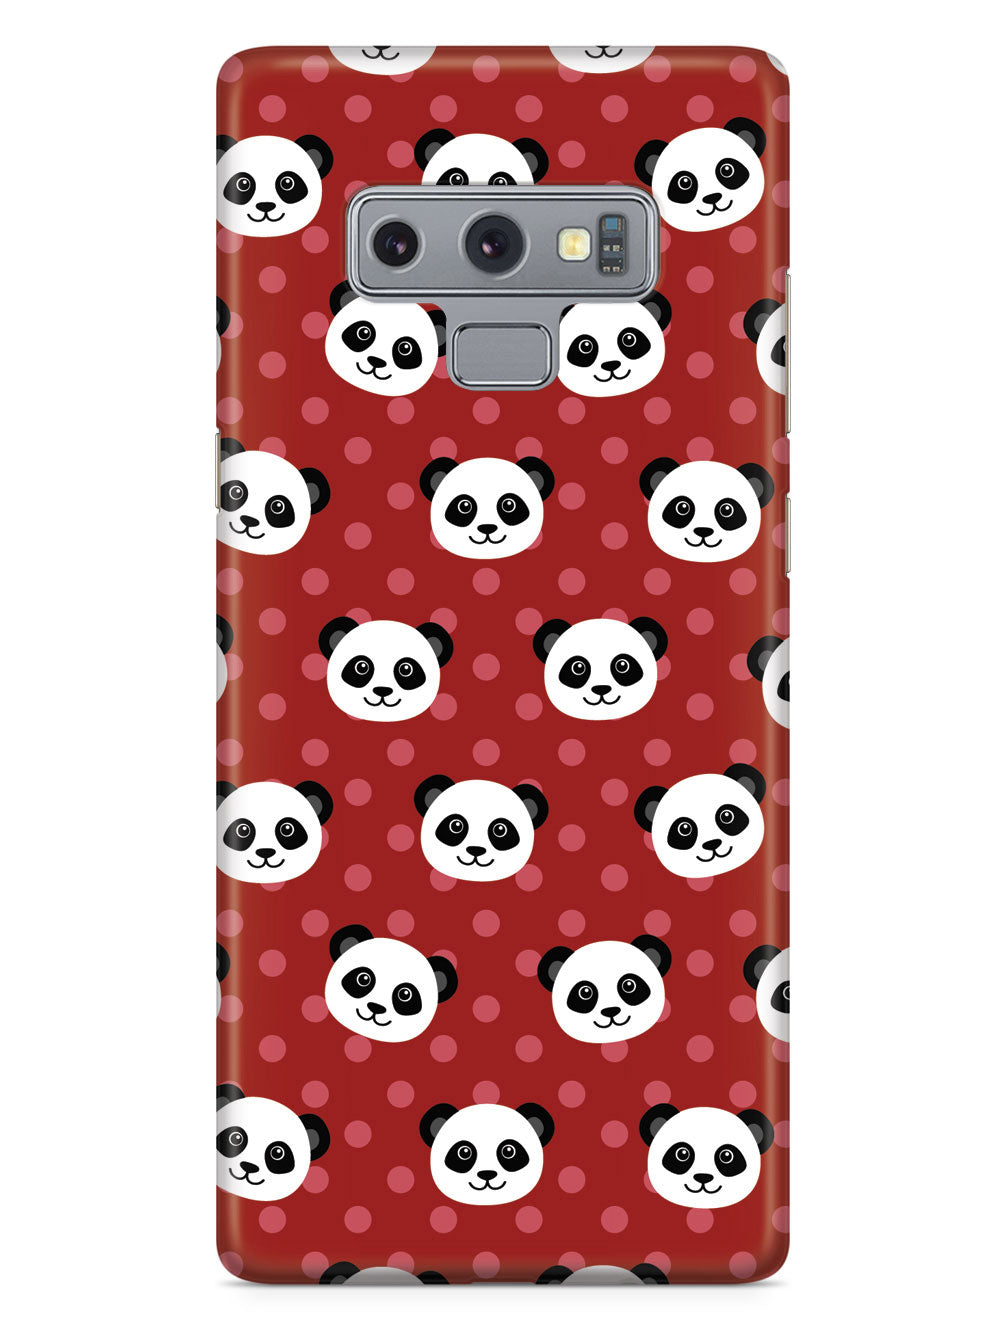 Cute Panda Pattern - Red Polka Dots Case